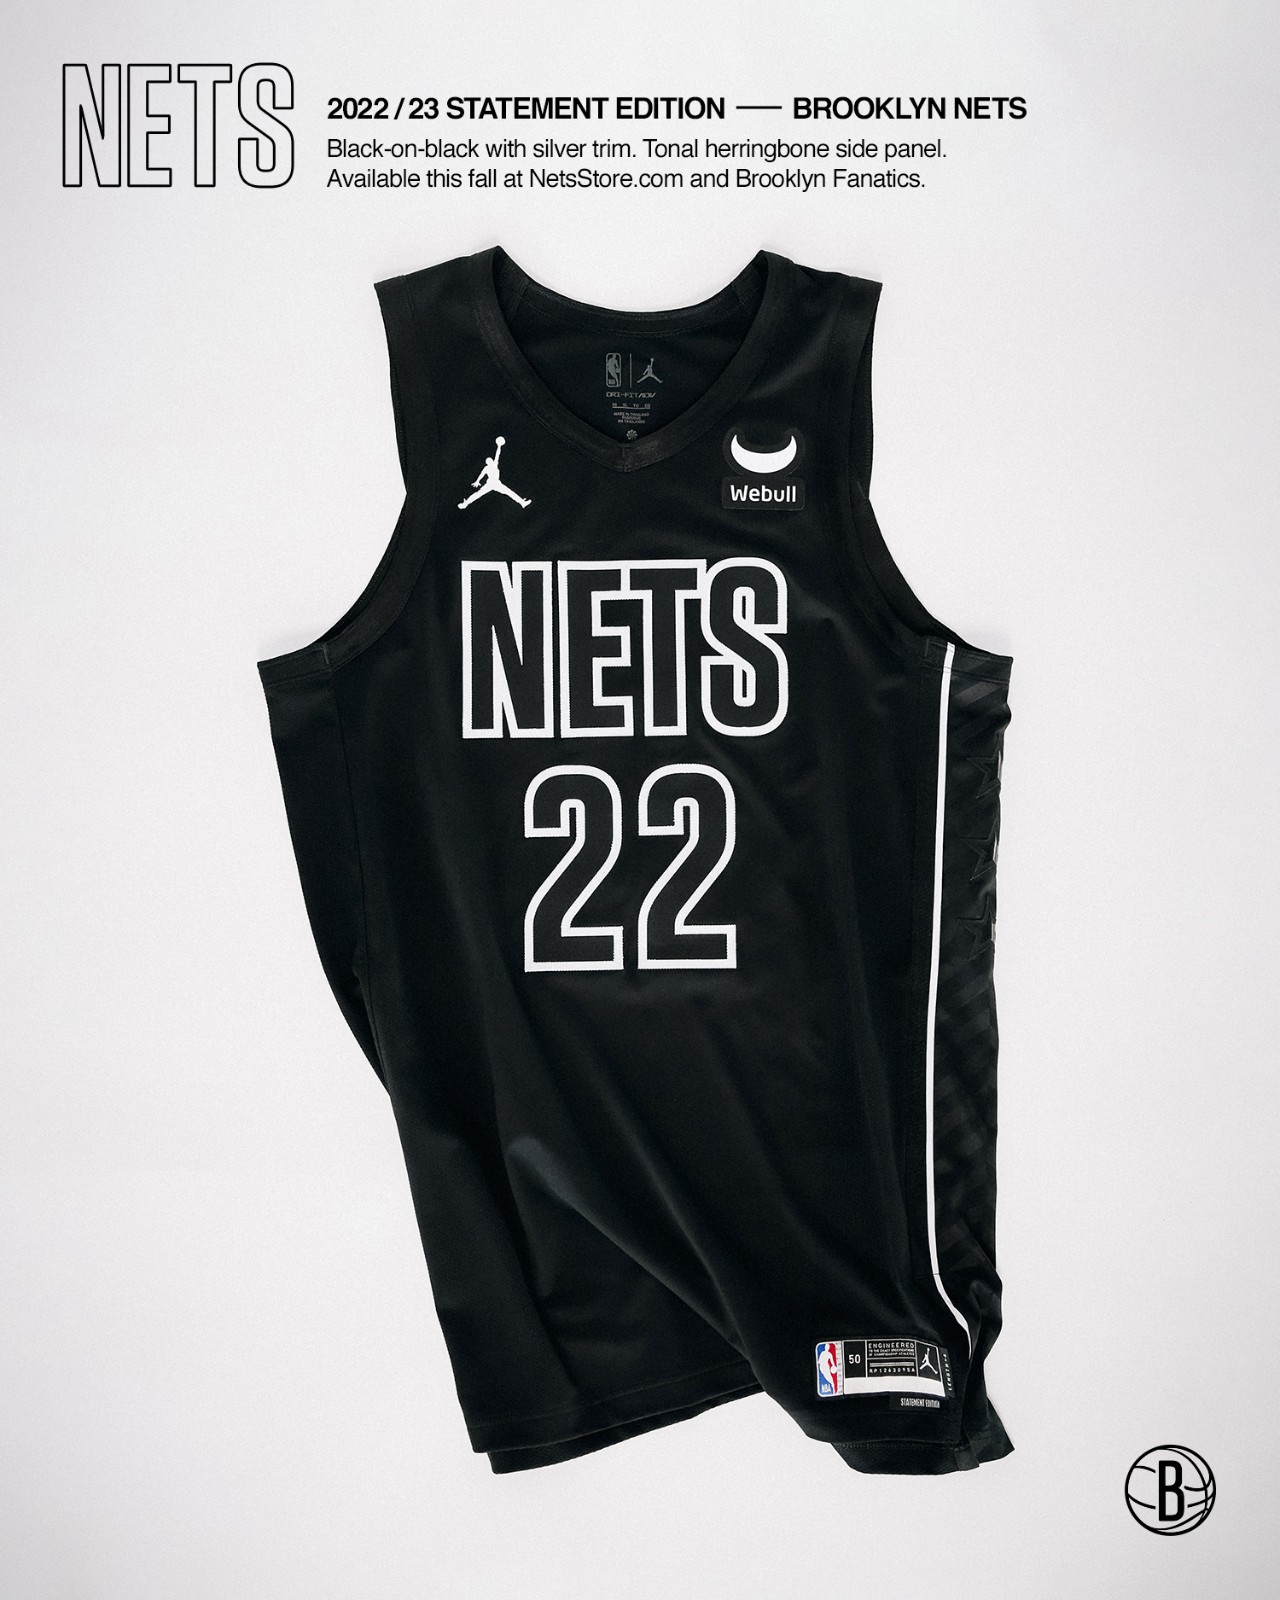 Brooklyn Nets 2022-23 Statement Edition Uniform Unveil 